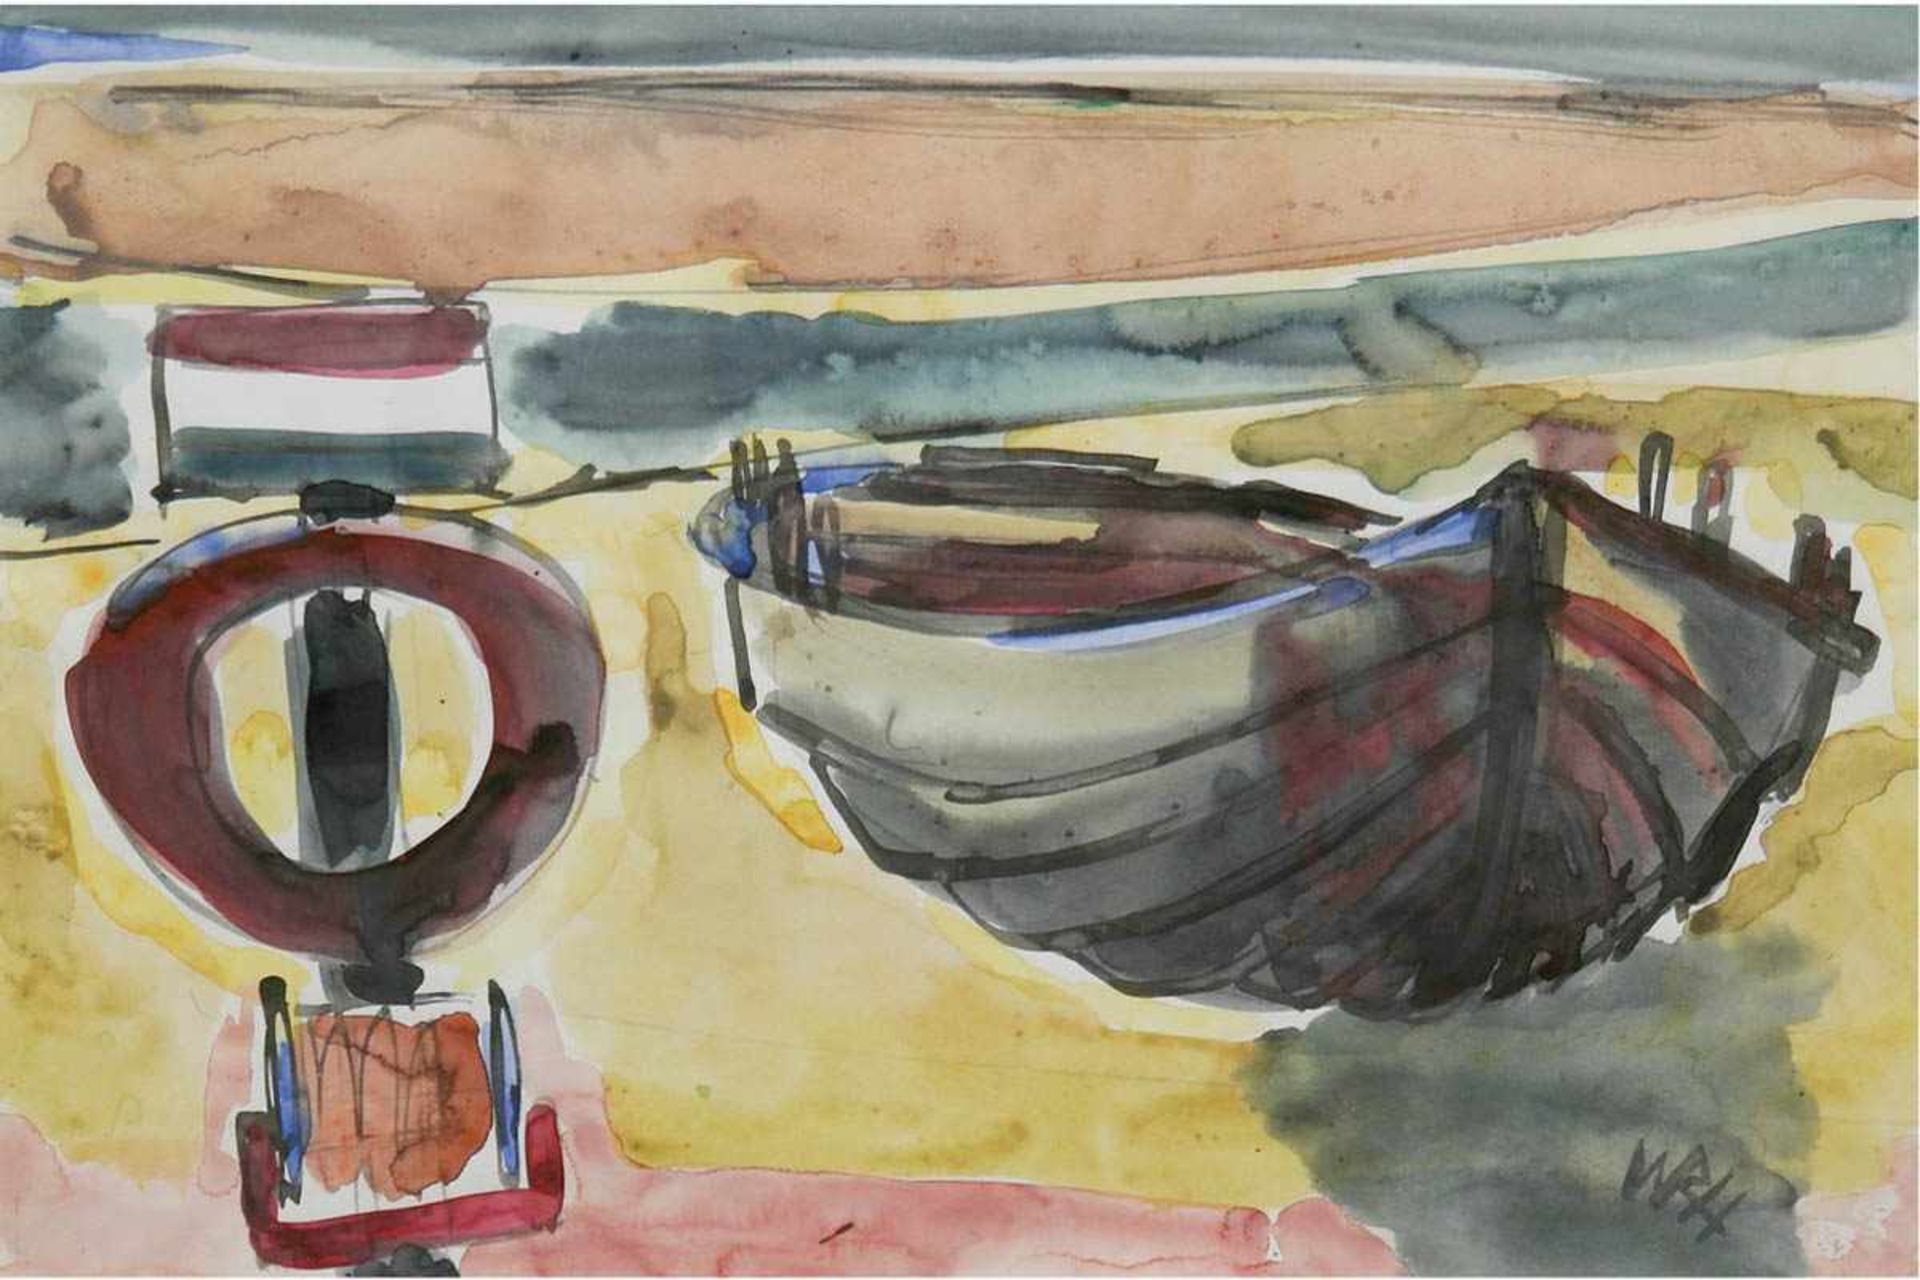 Huth, Wilhelm Robert (1890-1977) "Boote am Strand", Aquarell, sign. u.r., 28x40 cm, imPassepartout